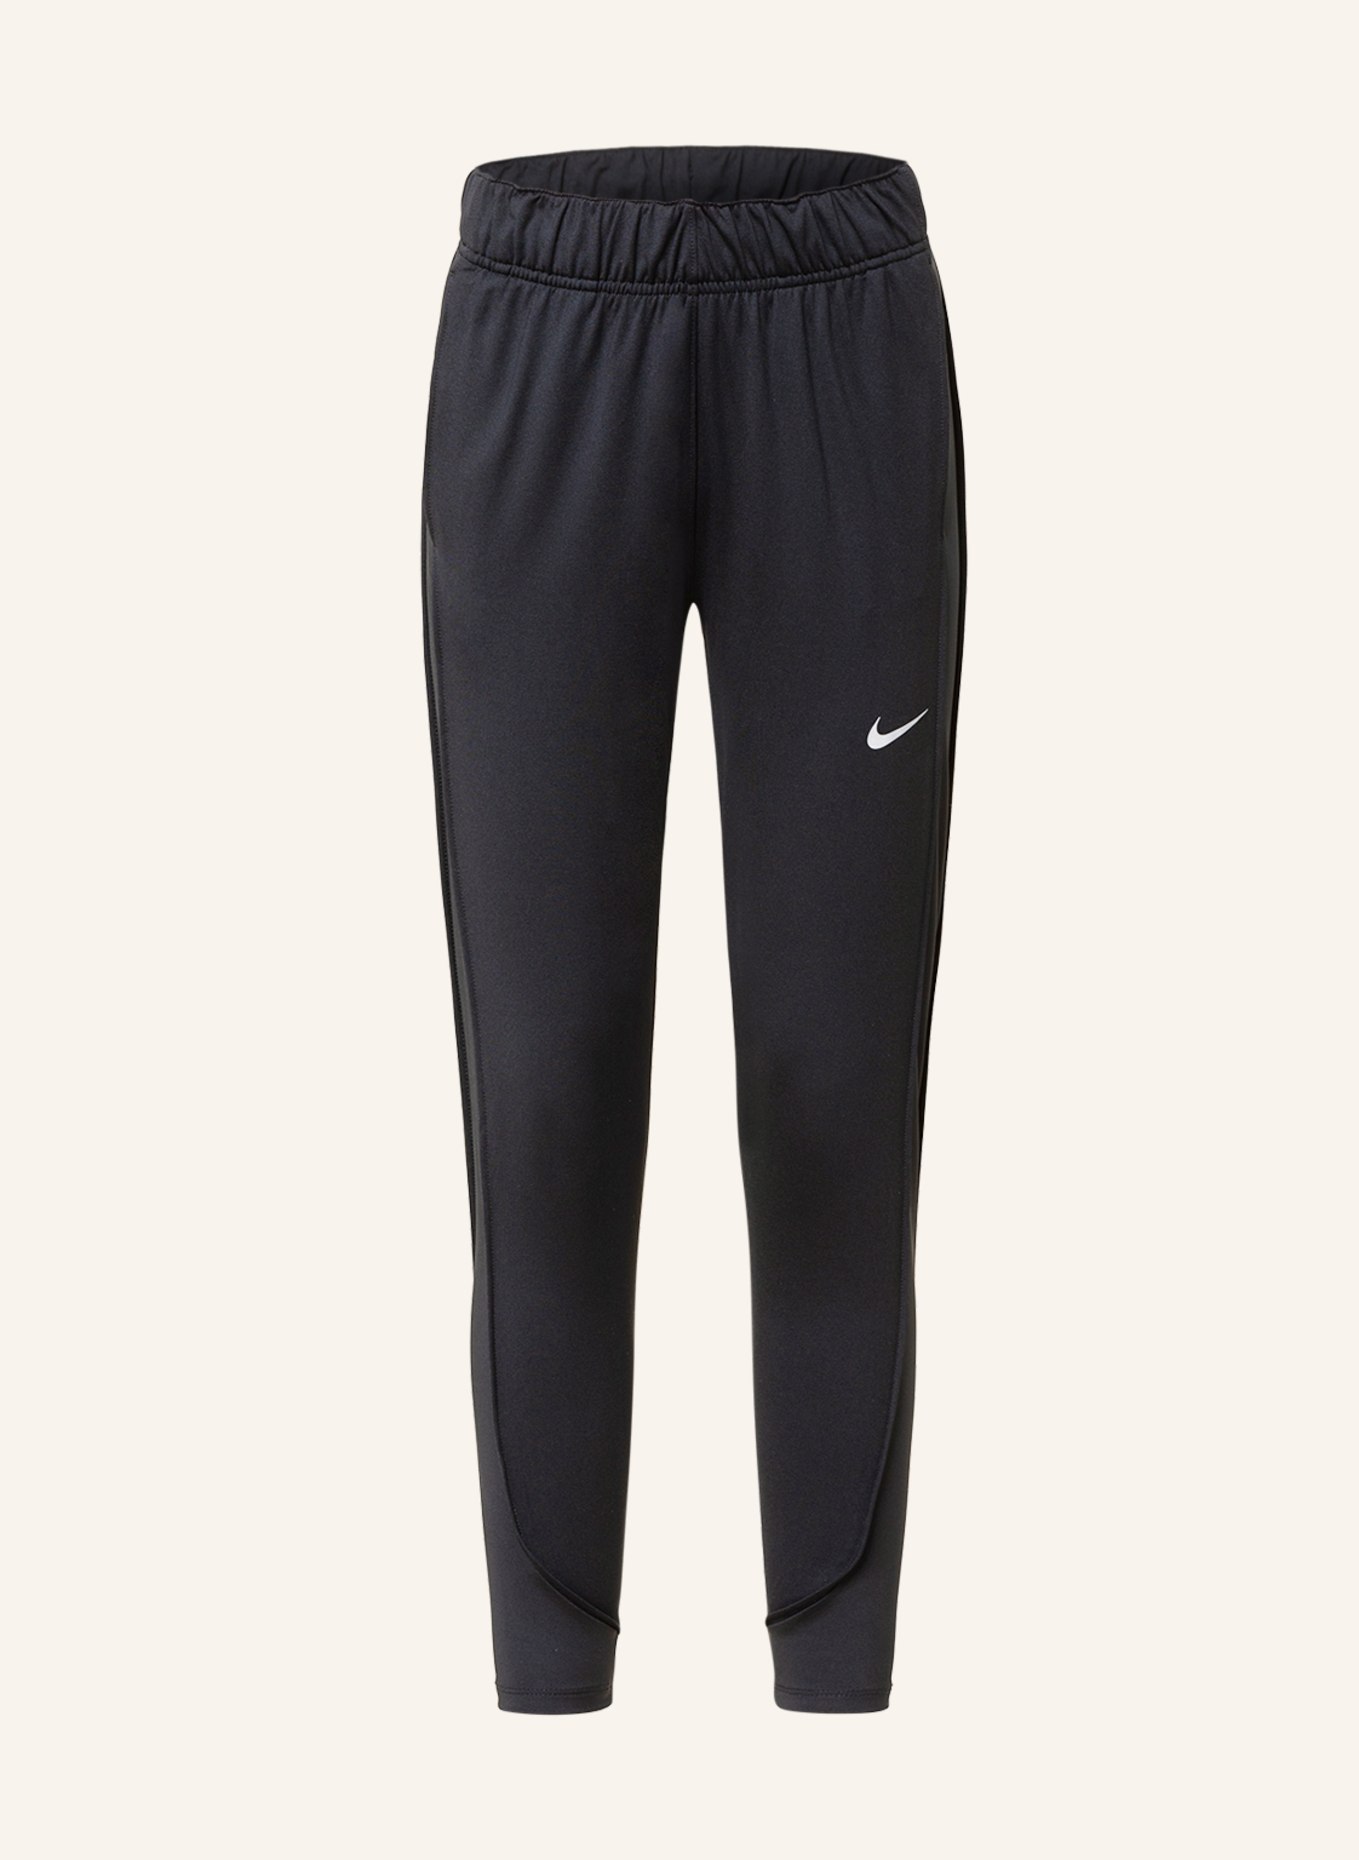 Pantalon Femme Nike ThermaFit Essential Running